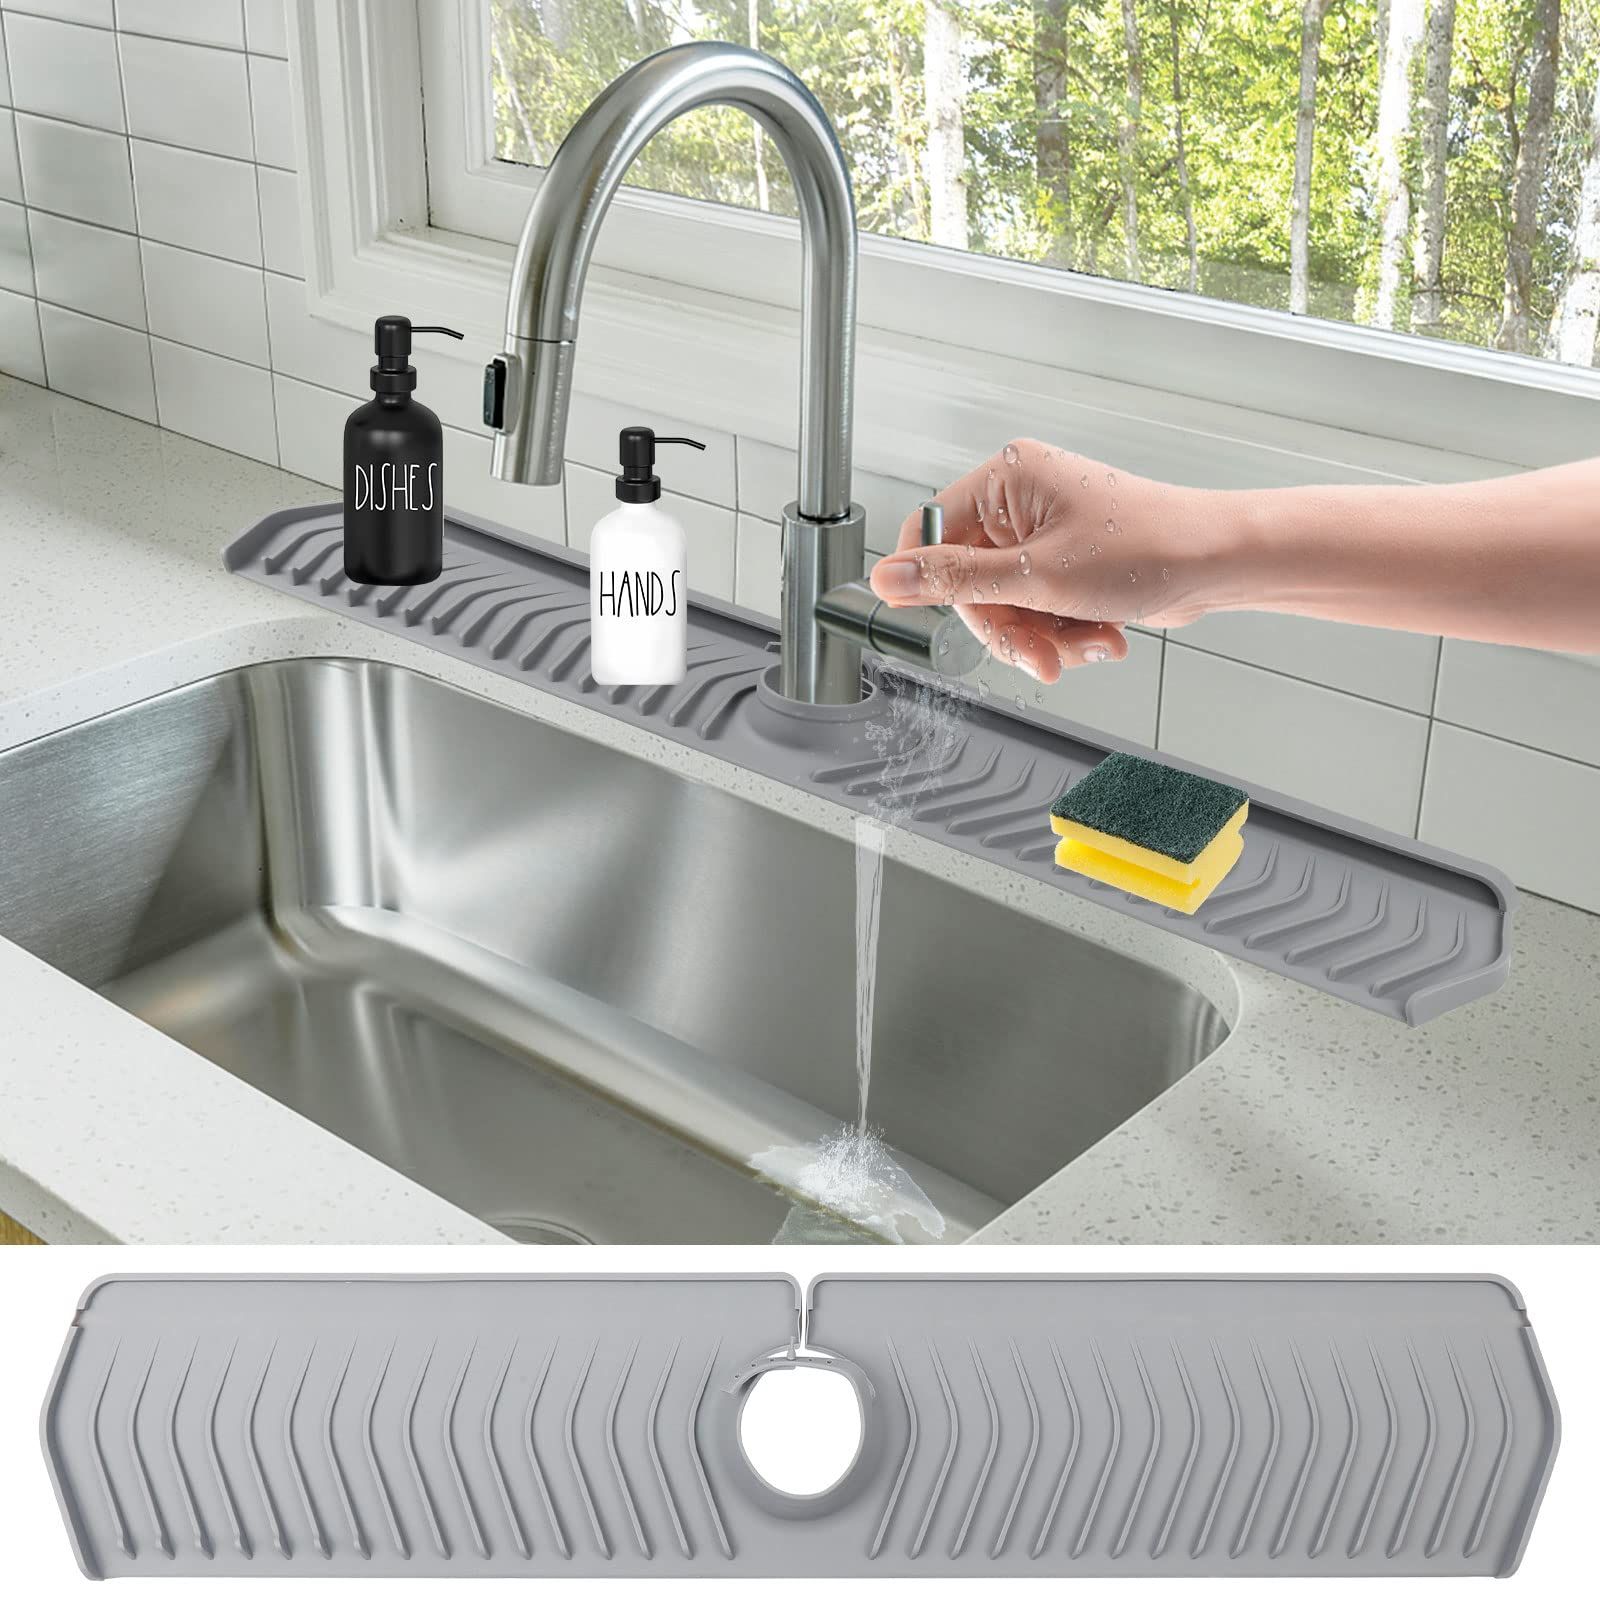  Ternal Sinkmat for Kitchen Faucet, Original Design